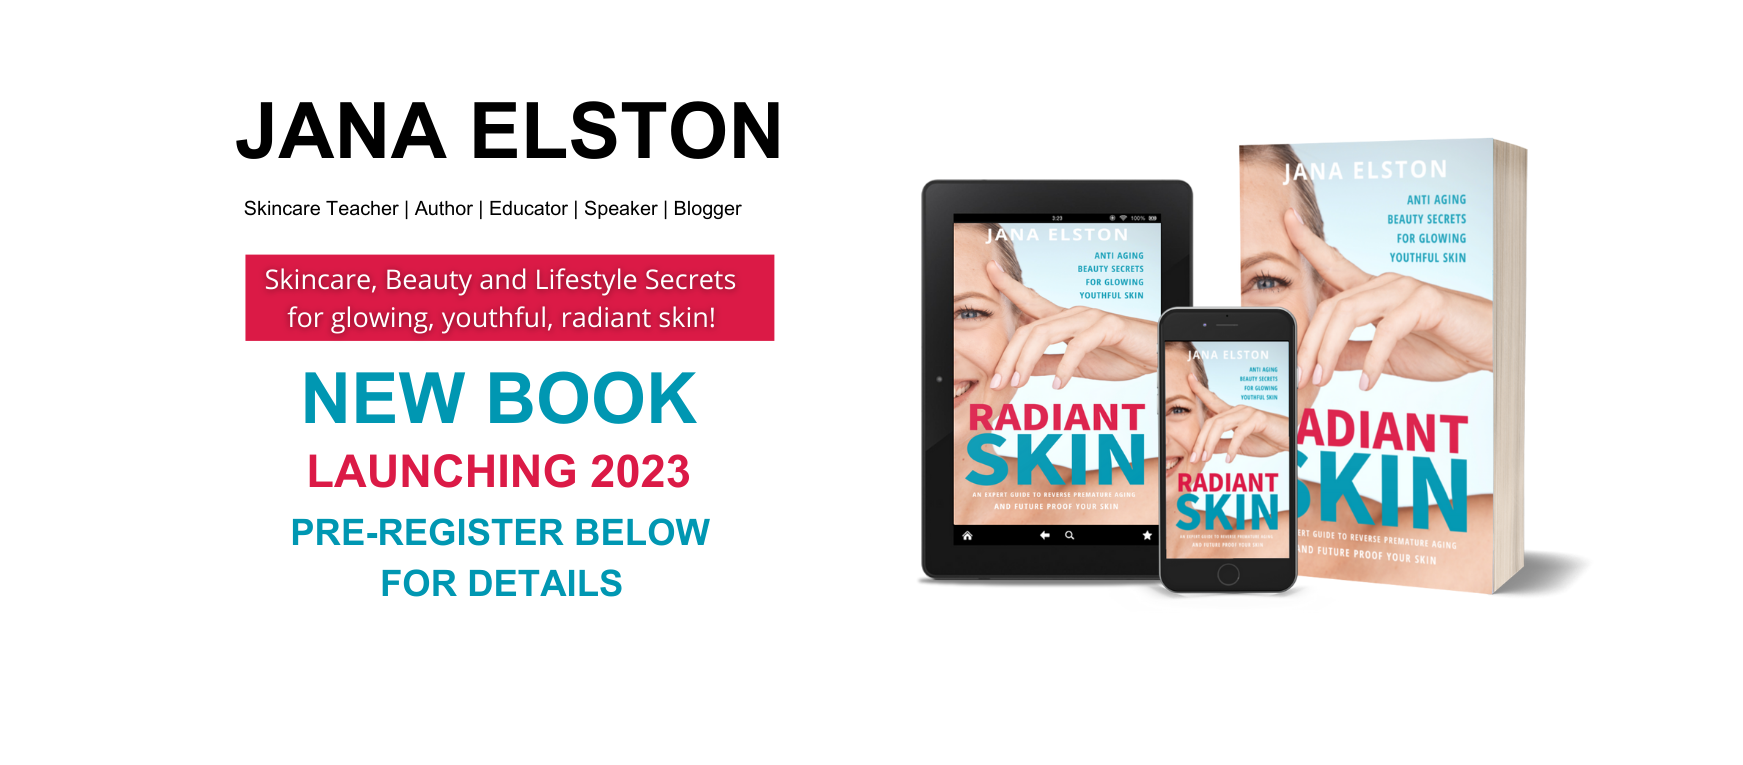 Radian Skin E-book by Jana Elston